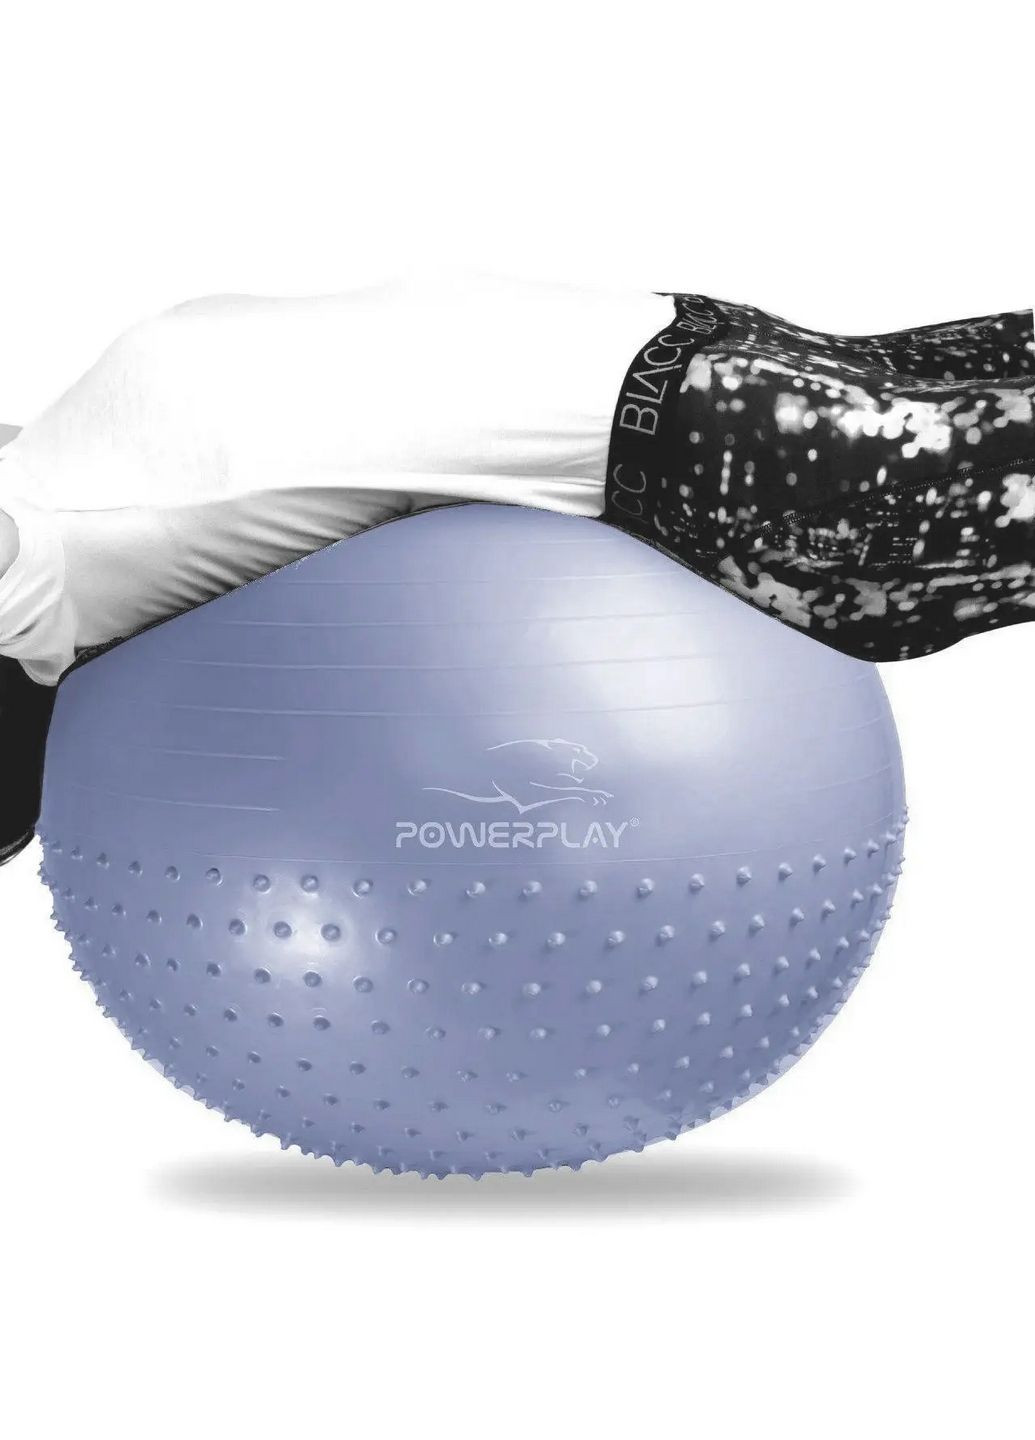 М'яч для фітнесу 4003 із насосом PowerPlay (293419409)